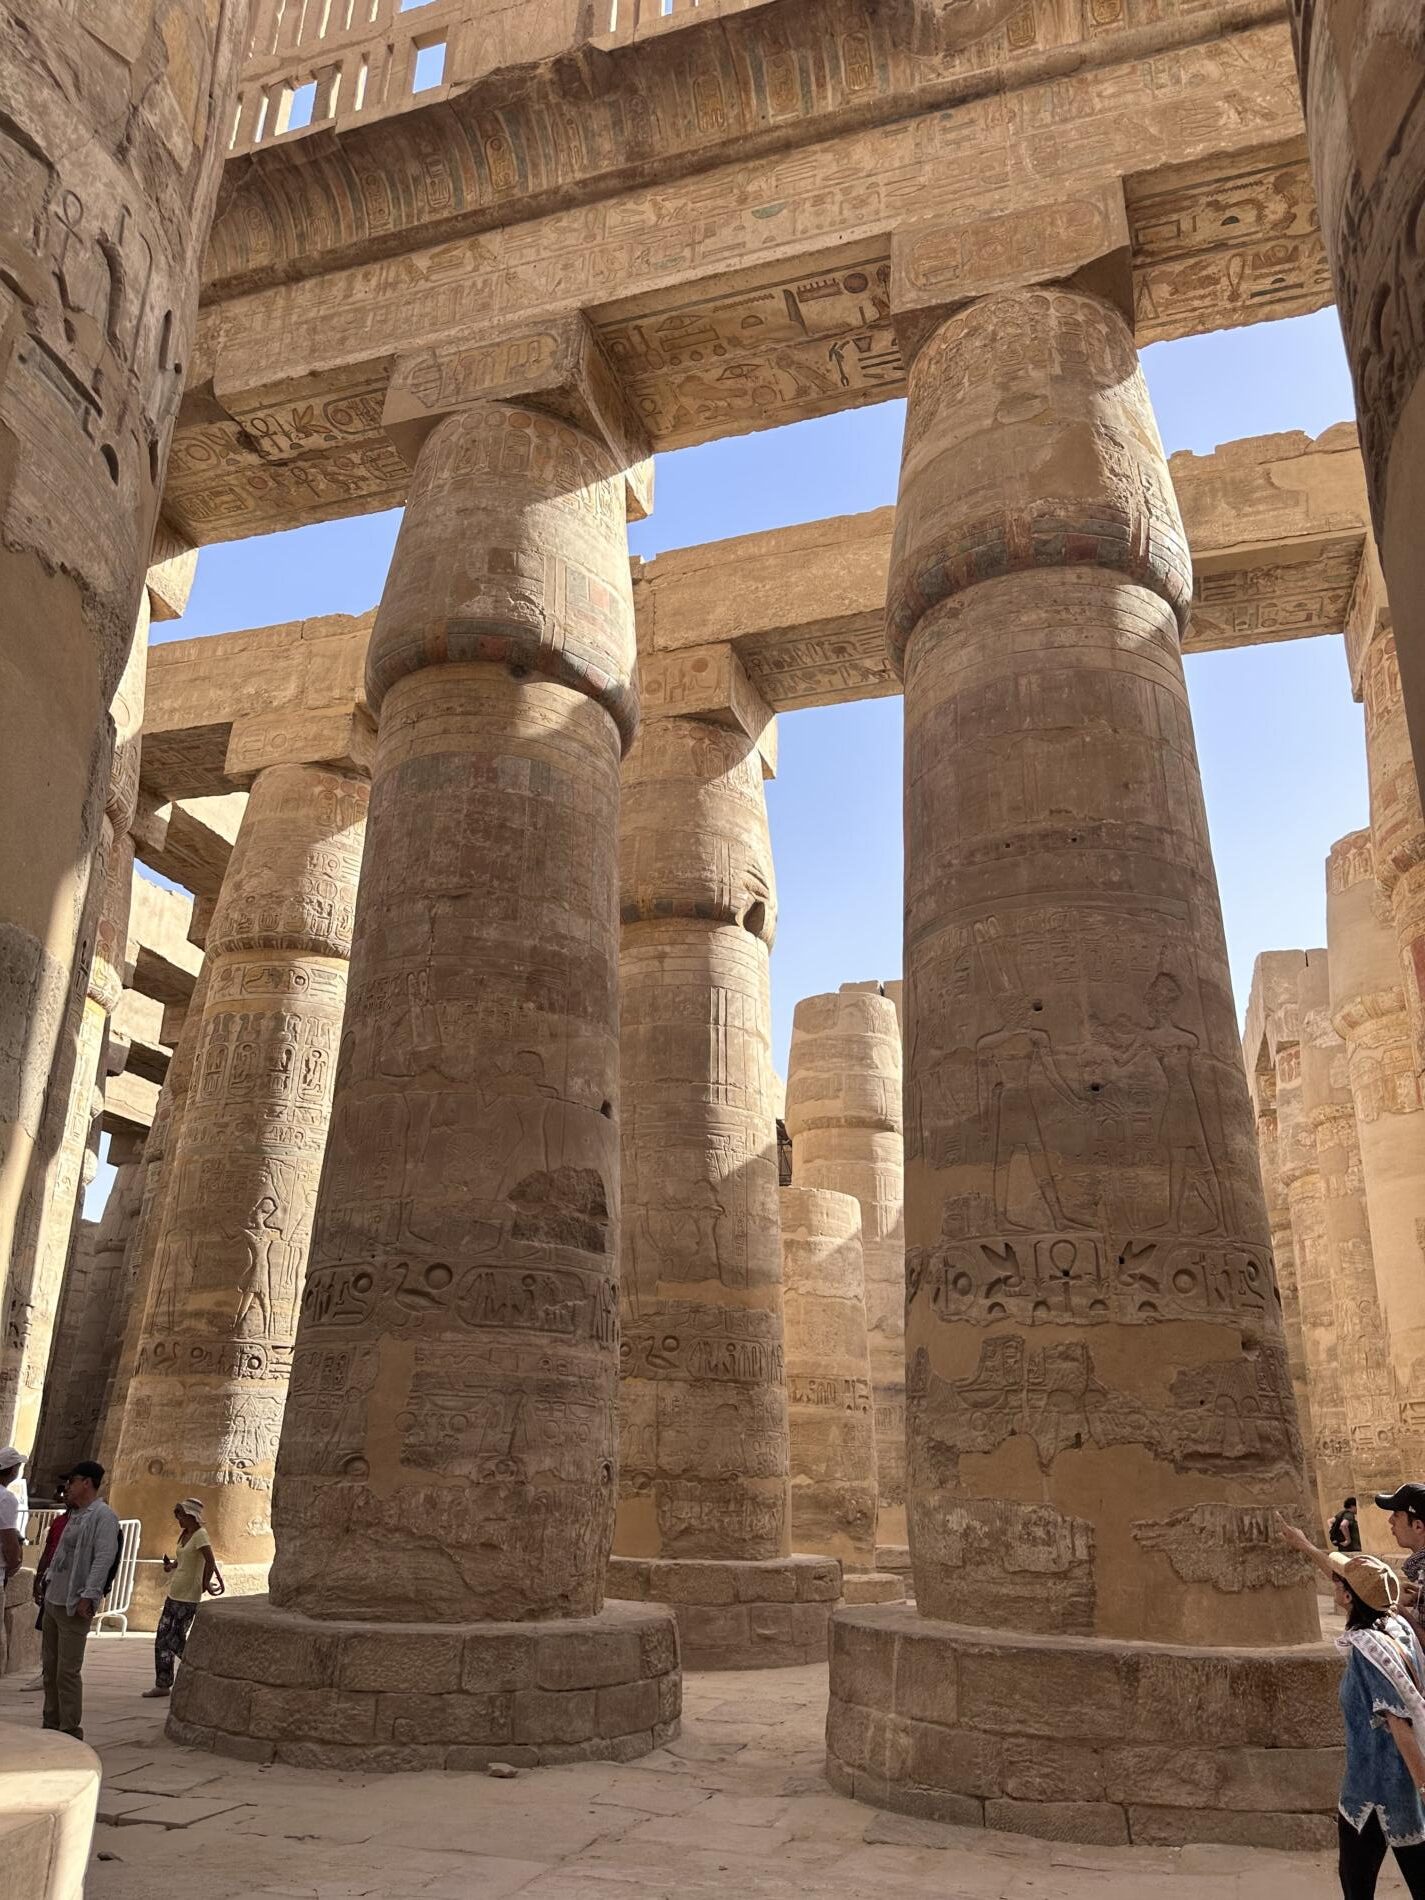 Temple of Karnak pillars